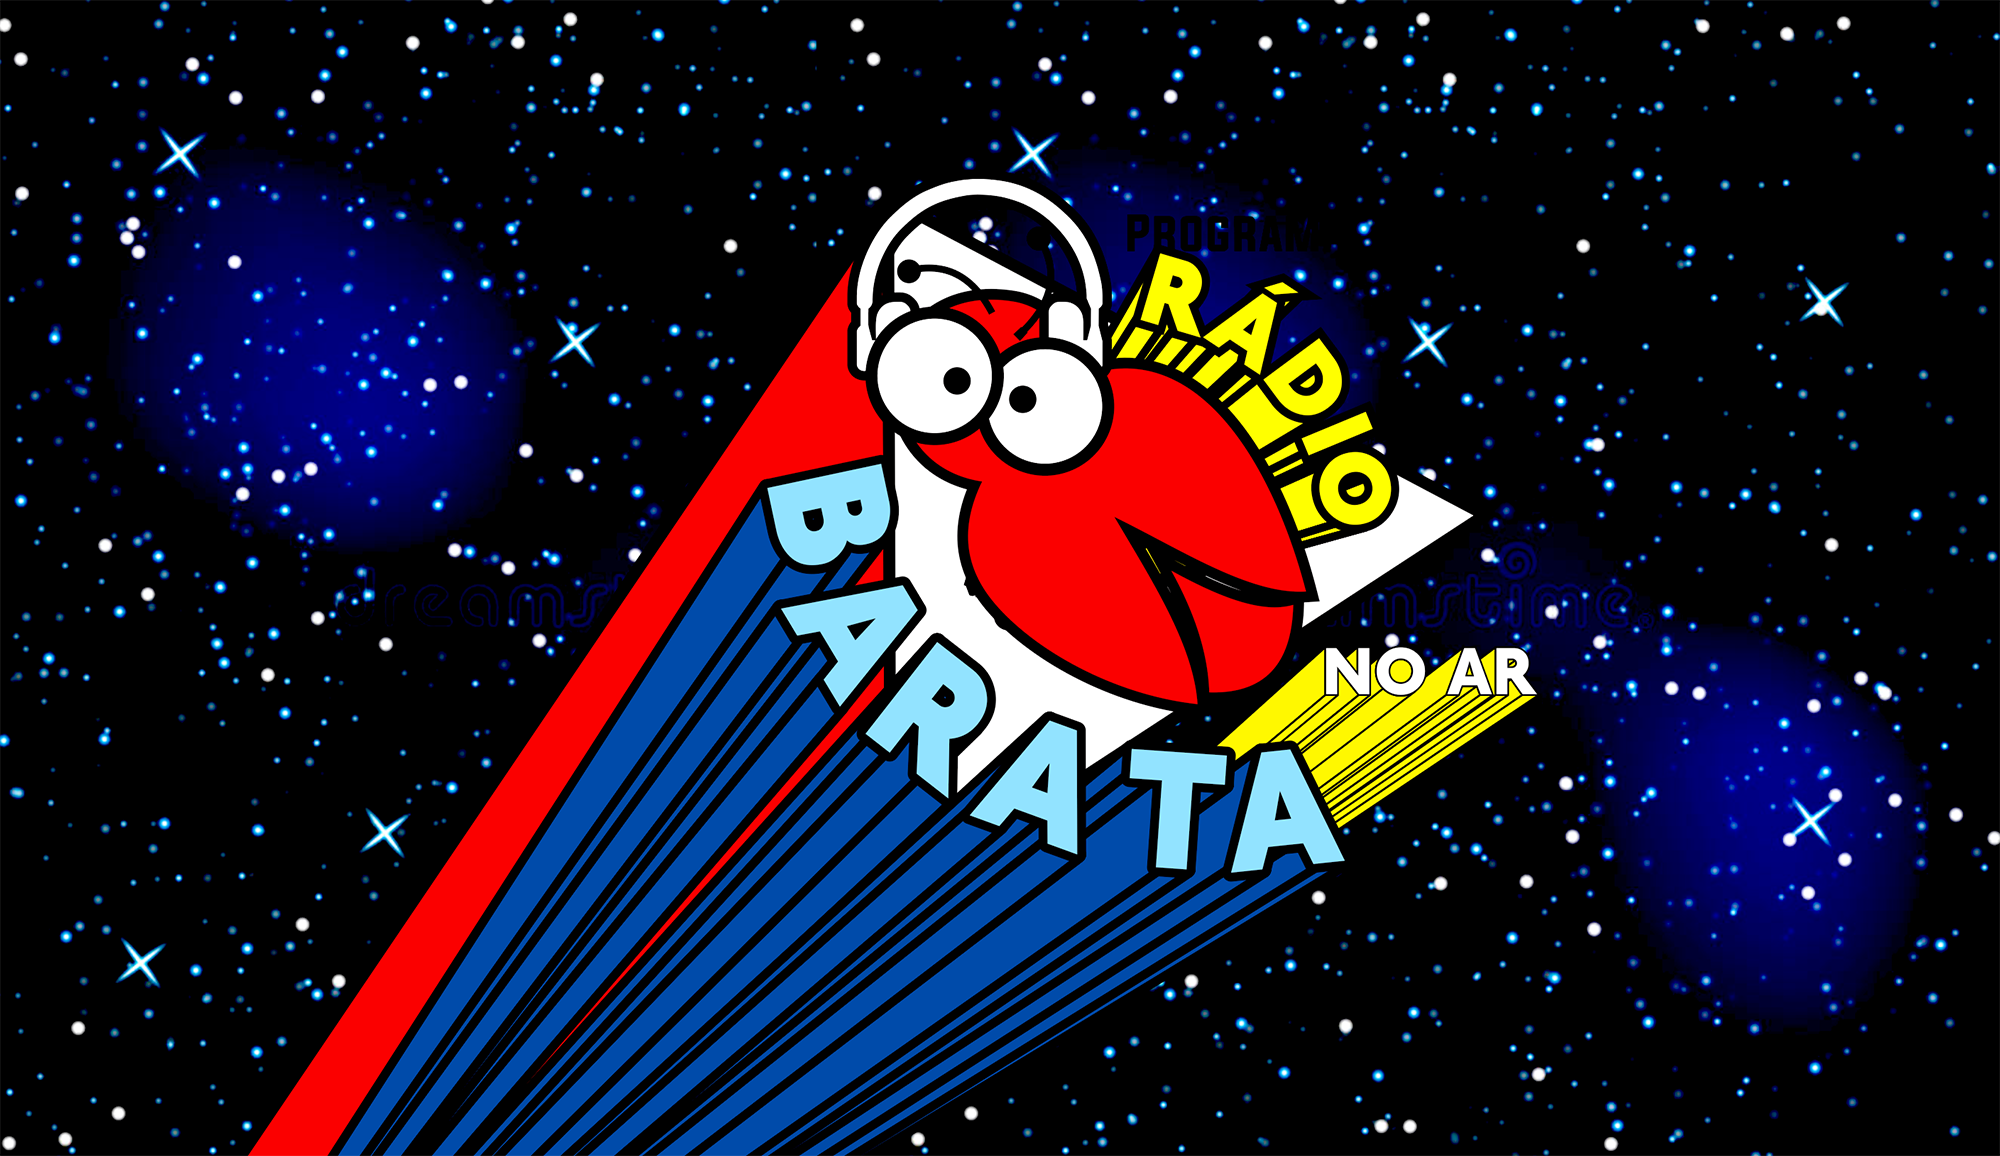 Radio Barata no Ar arte Universo capa